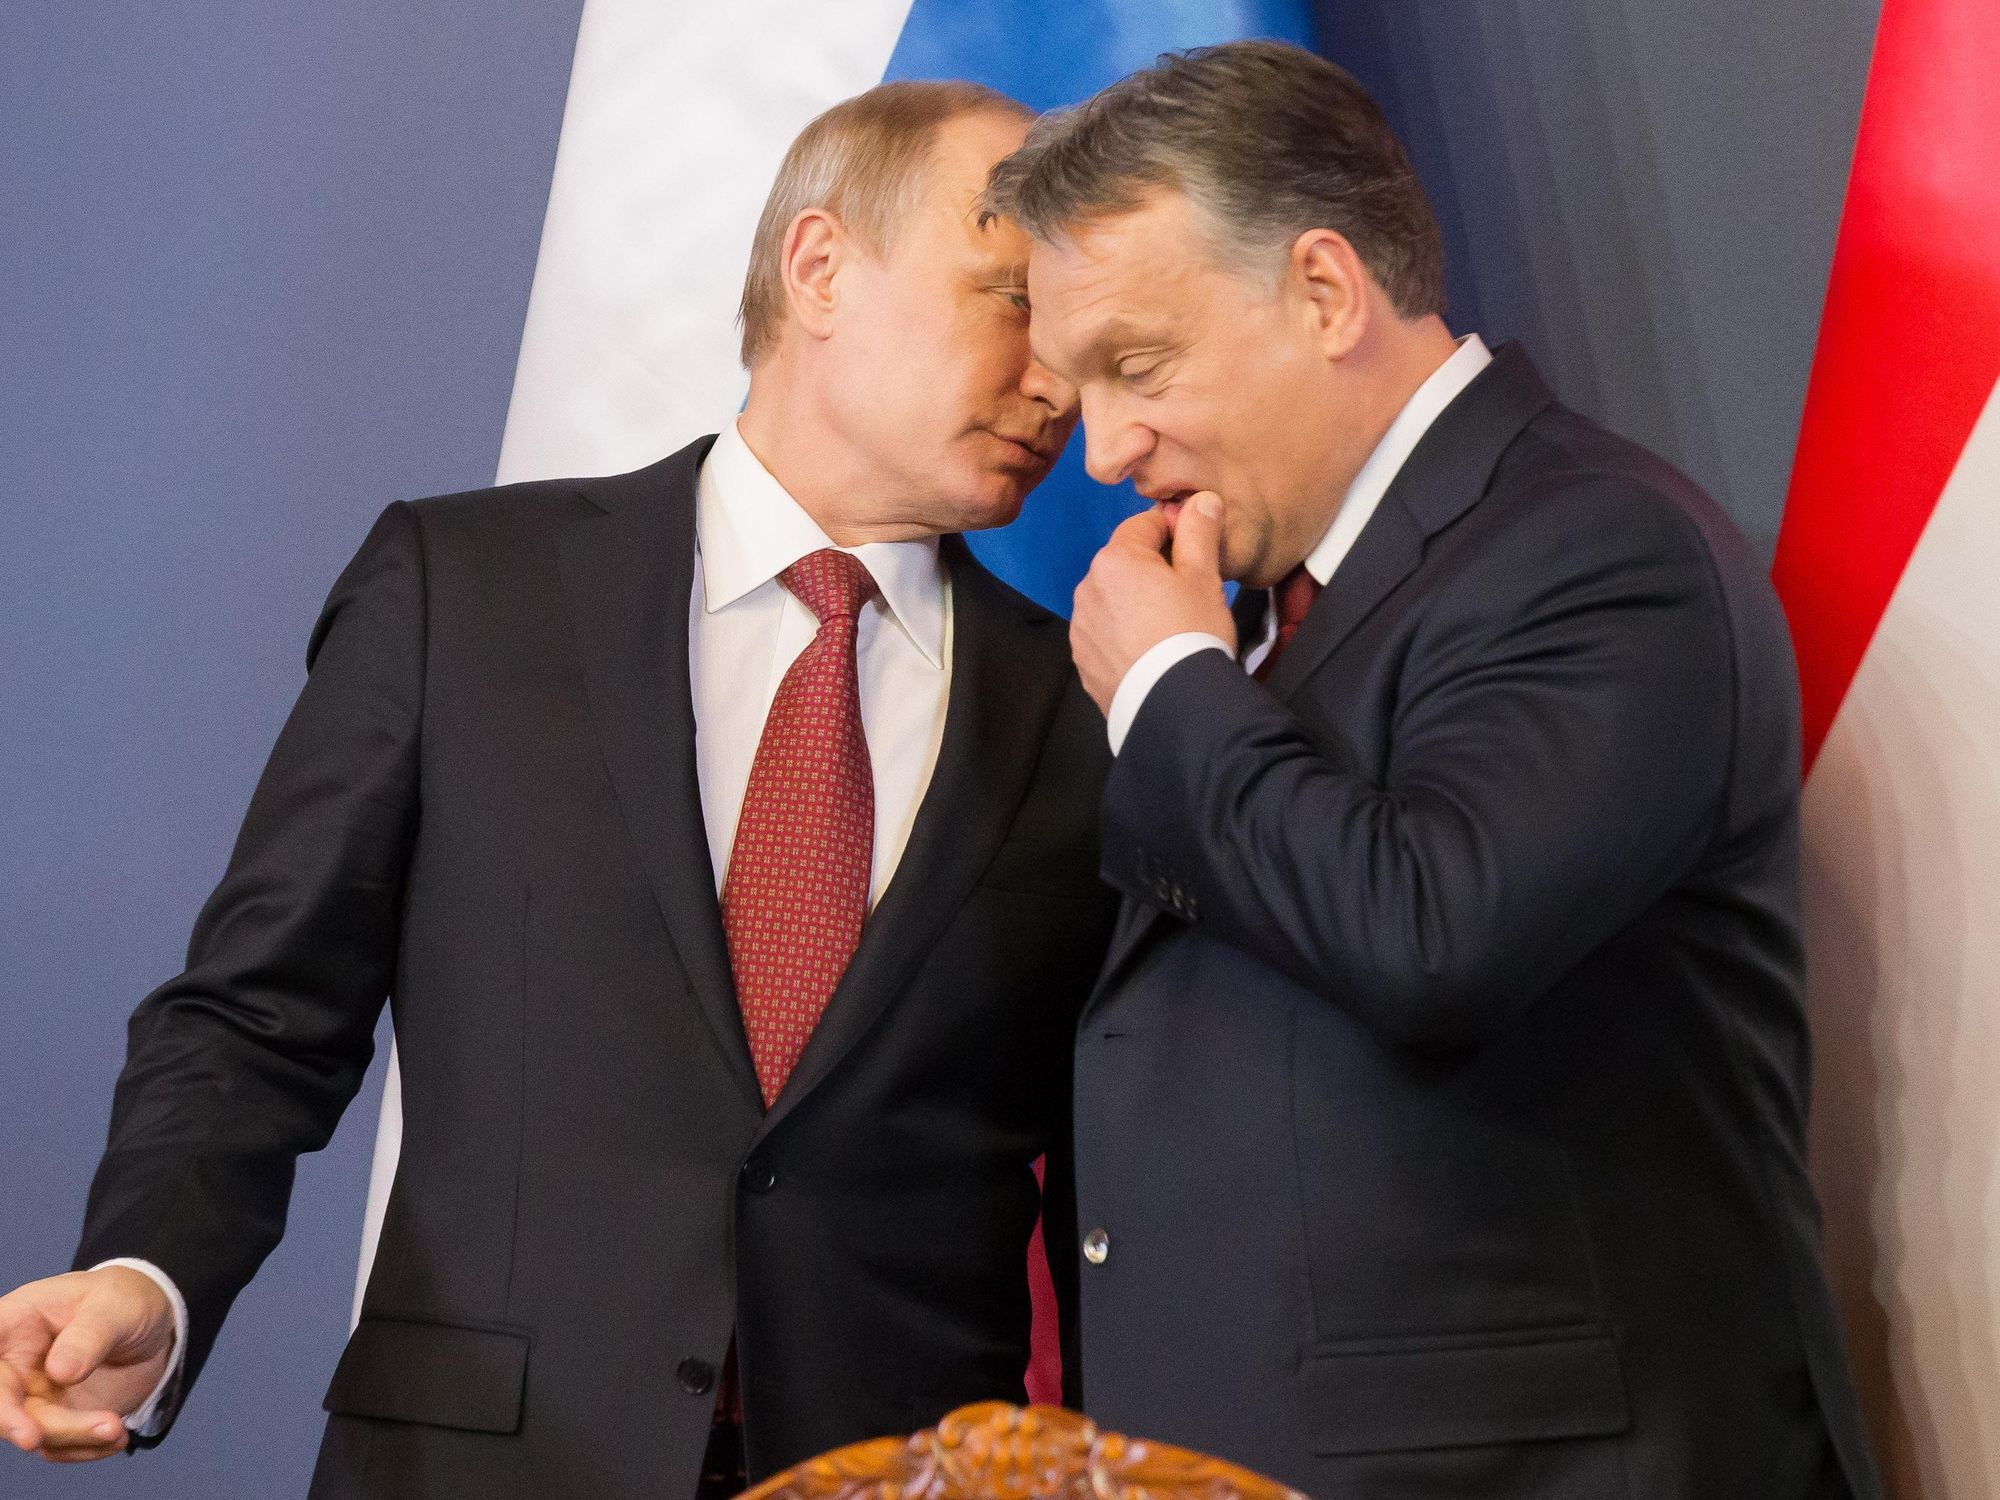 photo-of-russian-president-vladimir-putin-whispering-in-hungarian-prime-minister-viktor-orban-during-a-meeting-in-budapest.jpg